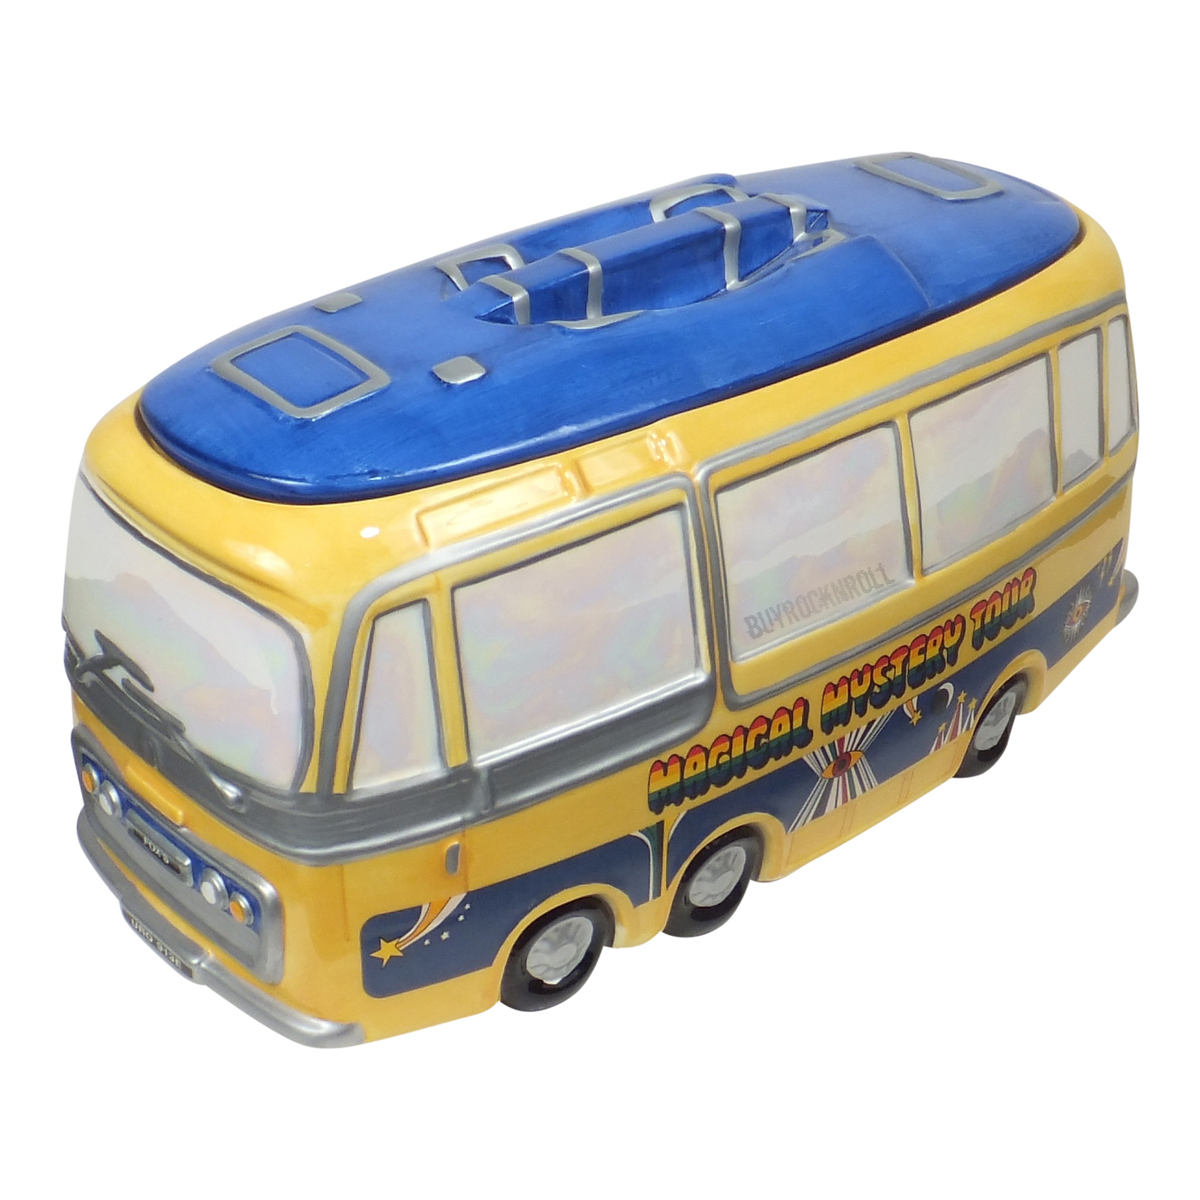 魅力的な価格 Loungefly Mystery Bus Cross MINI Body Loungefly